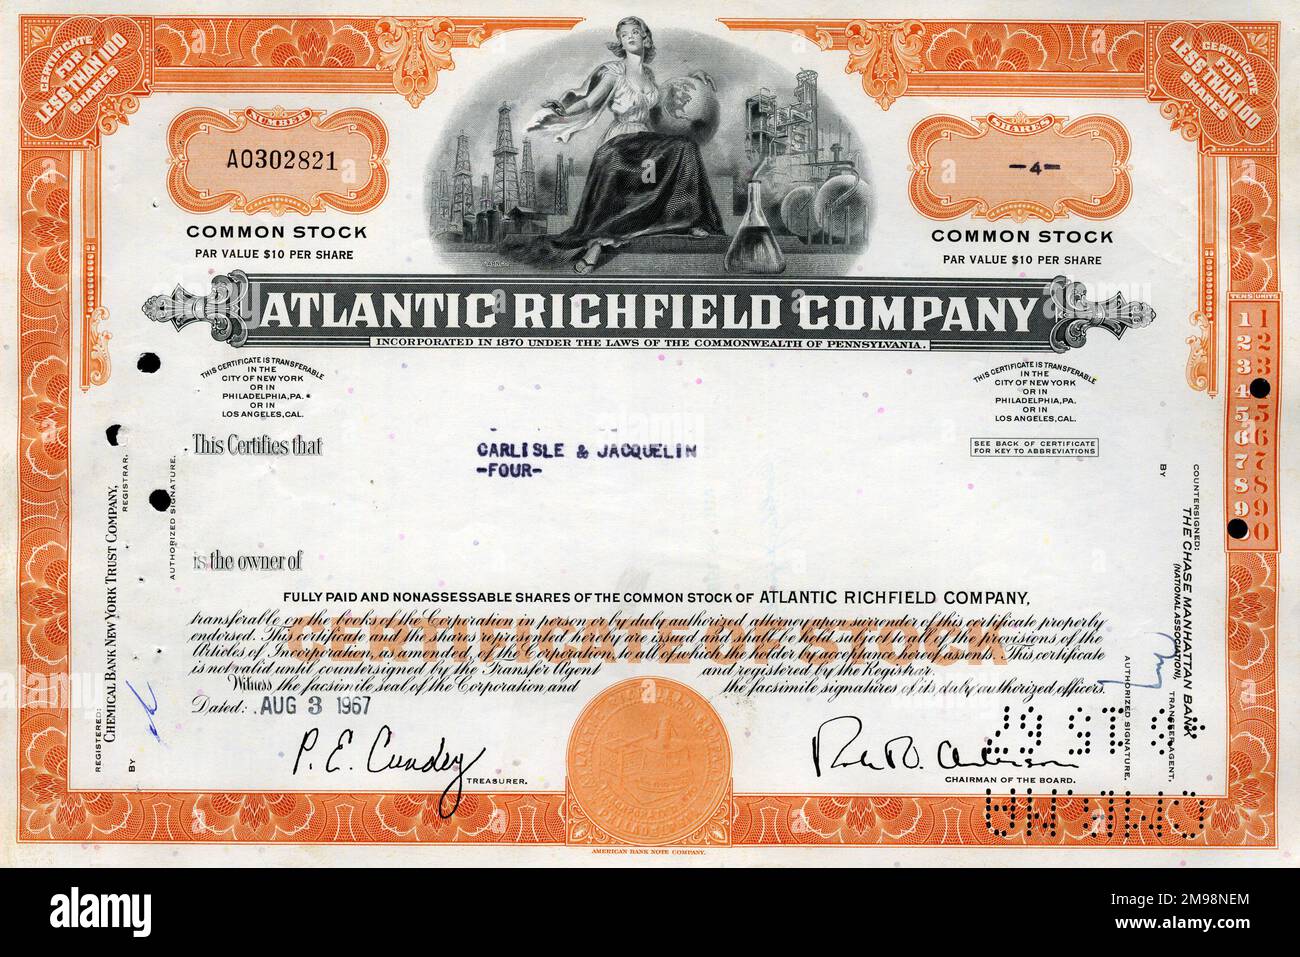 Stock Share Certificate - Atlantic Richfield Company, 40 shares. Stock Photo